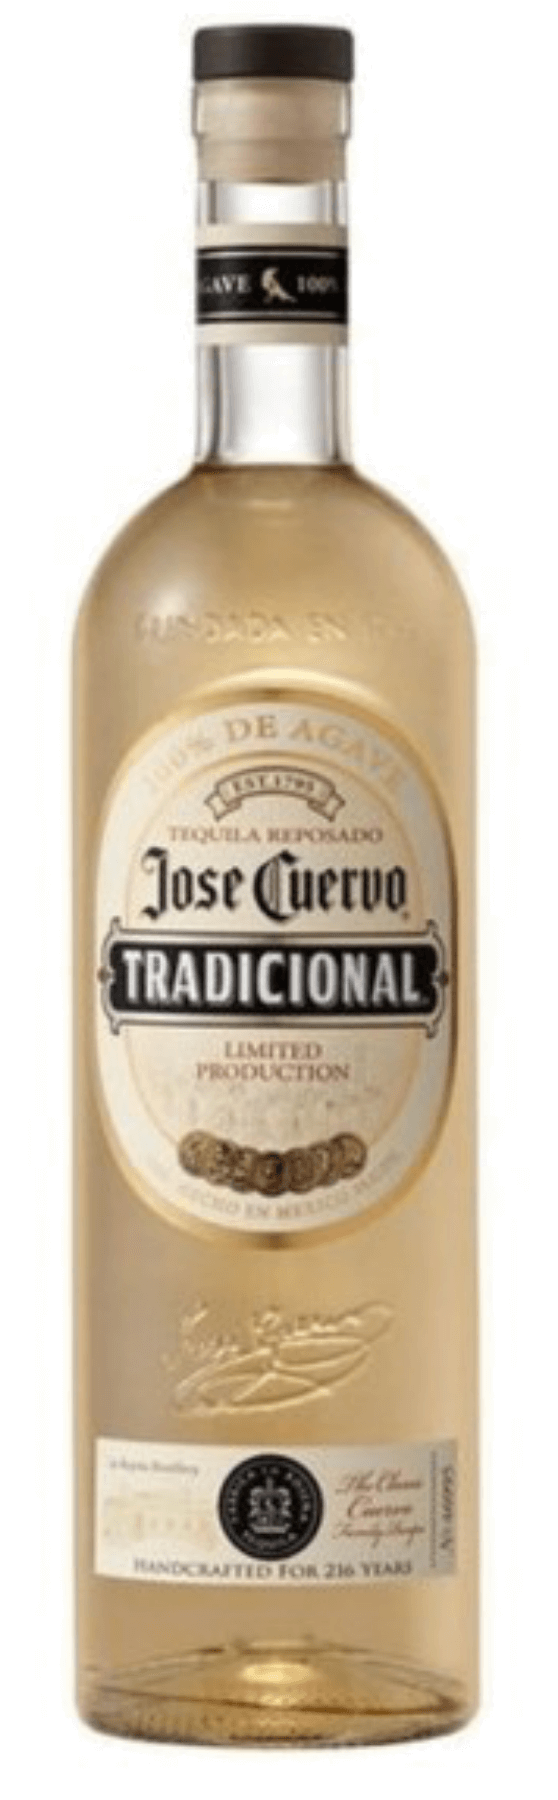 Jose Cuervo Tradicional Tequila Reposado 0,7L